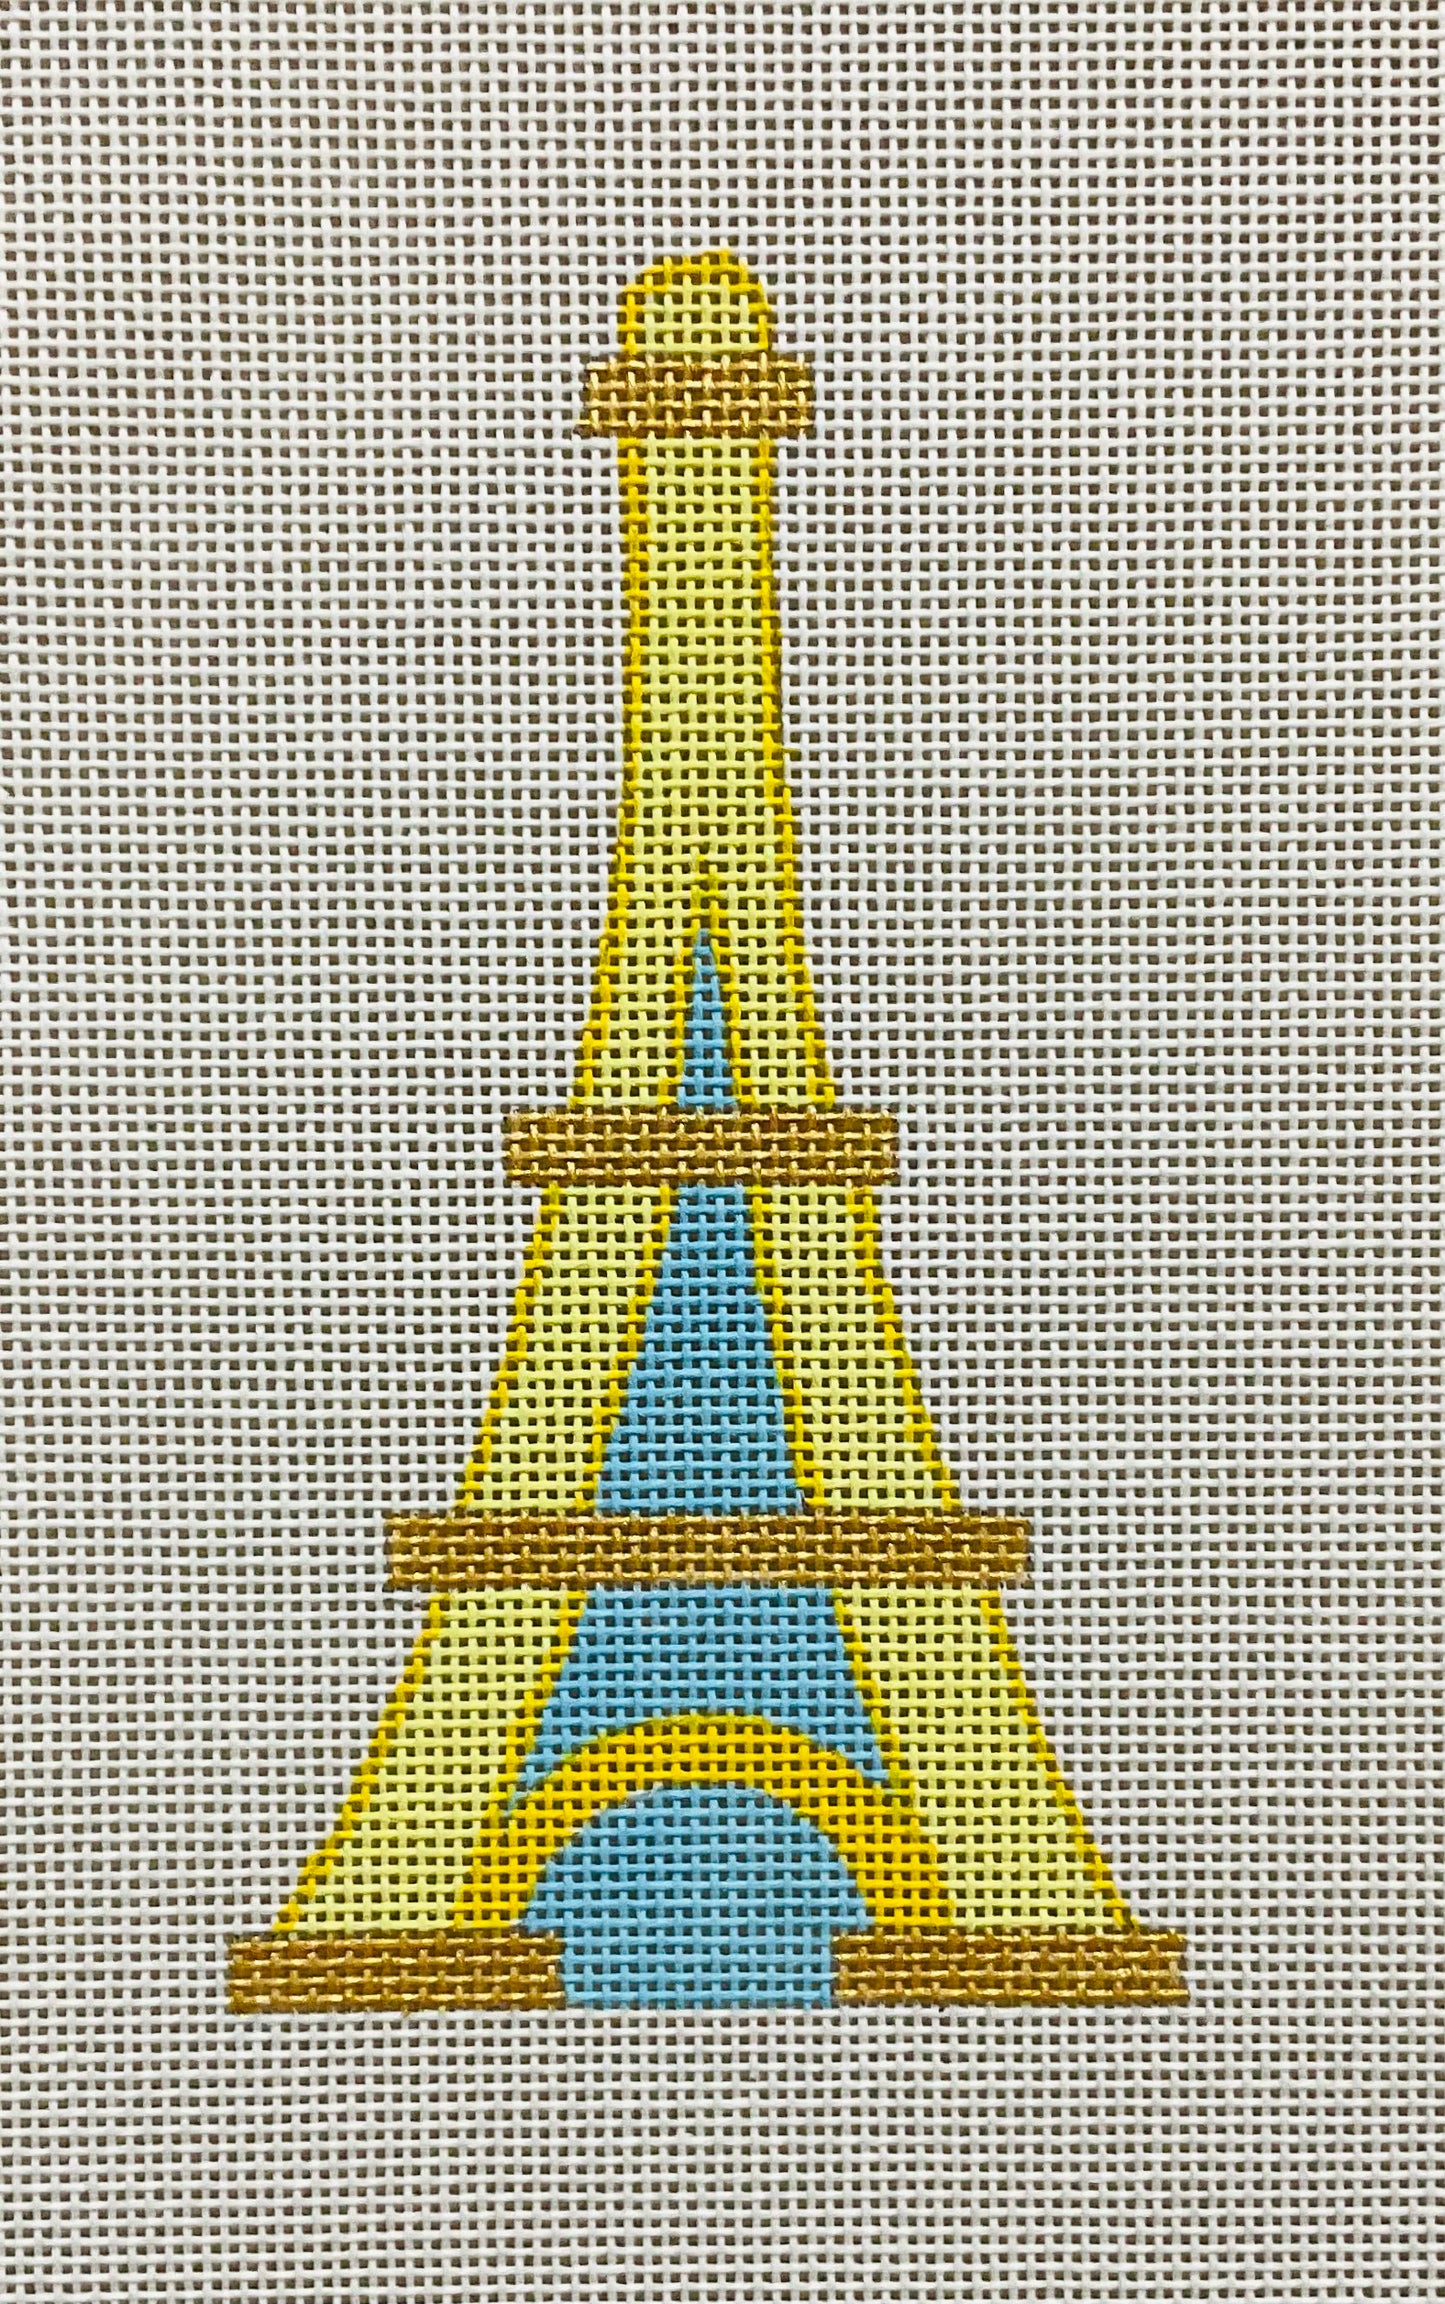 Eiffel Tower Yellow (#1)